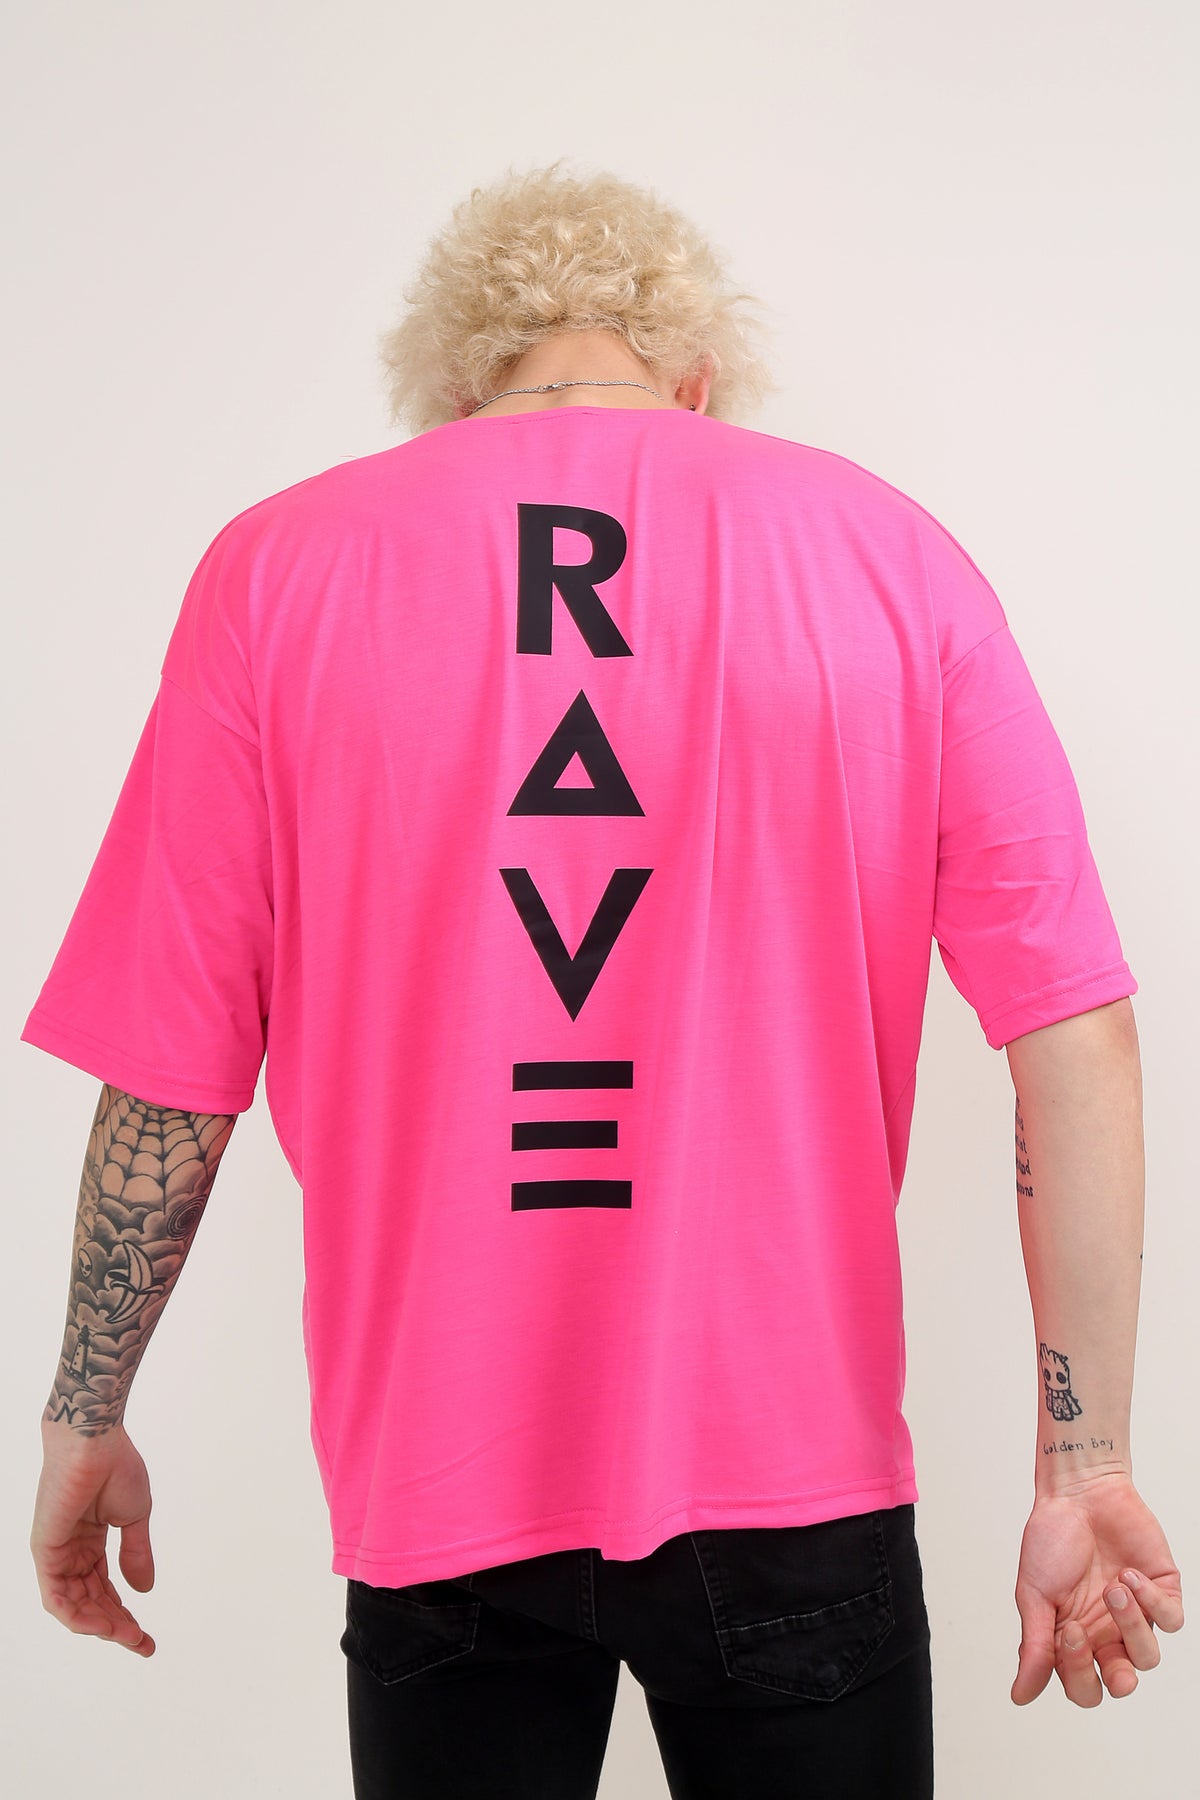 The R.A.V.E Oversize Neon Pembe T-Shirt